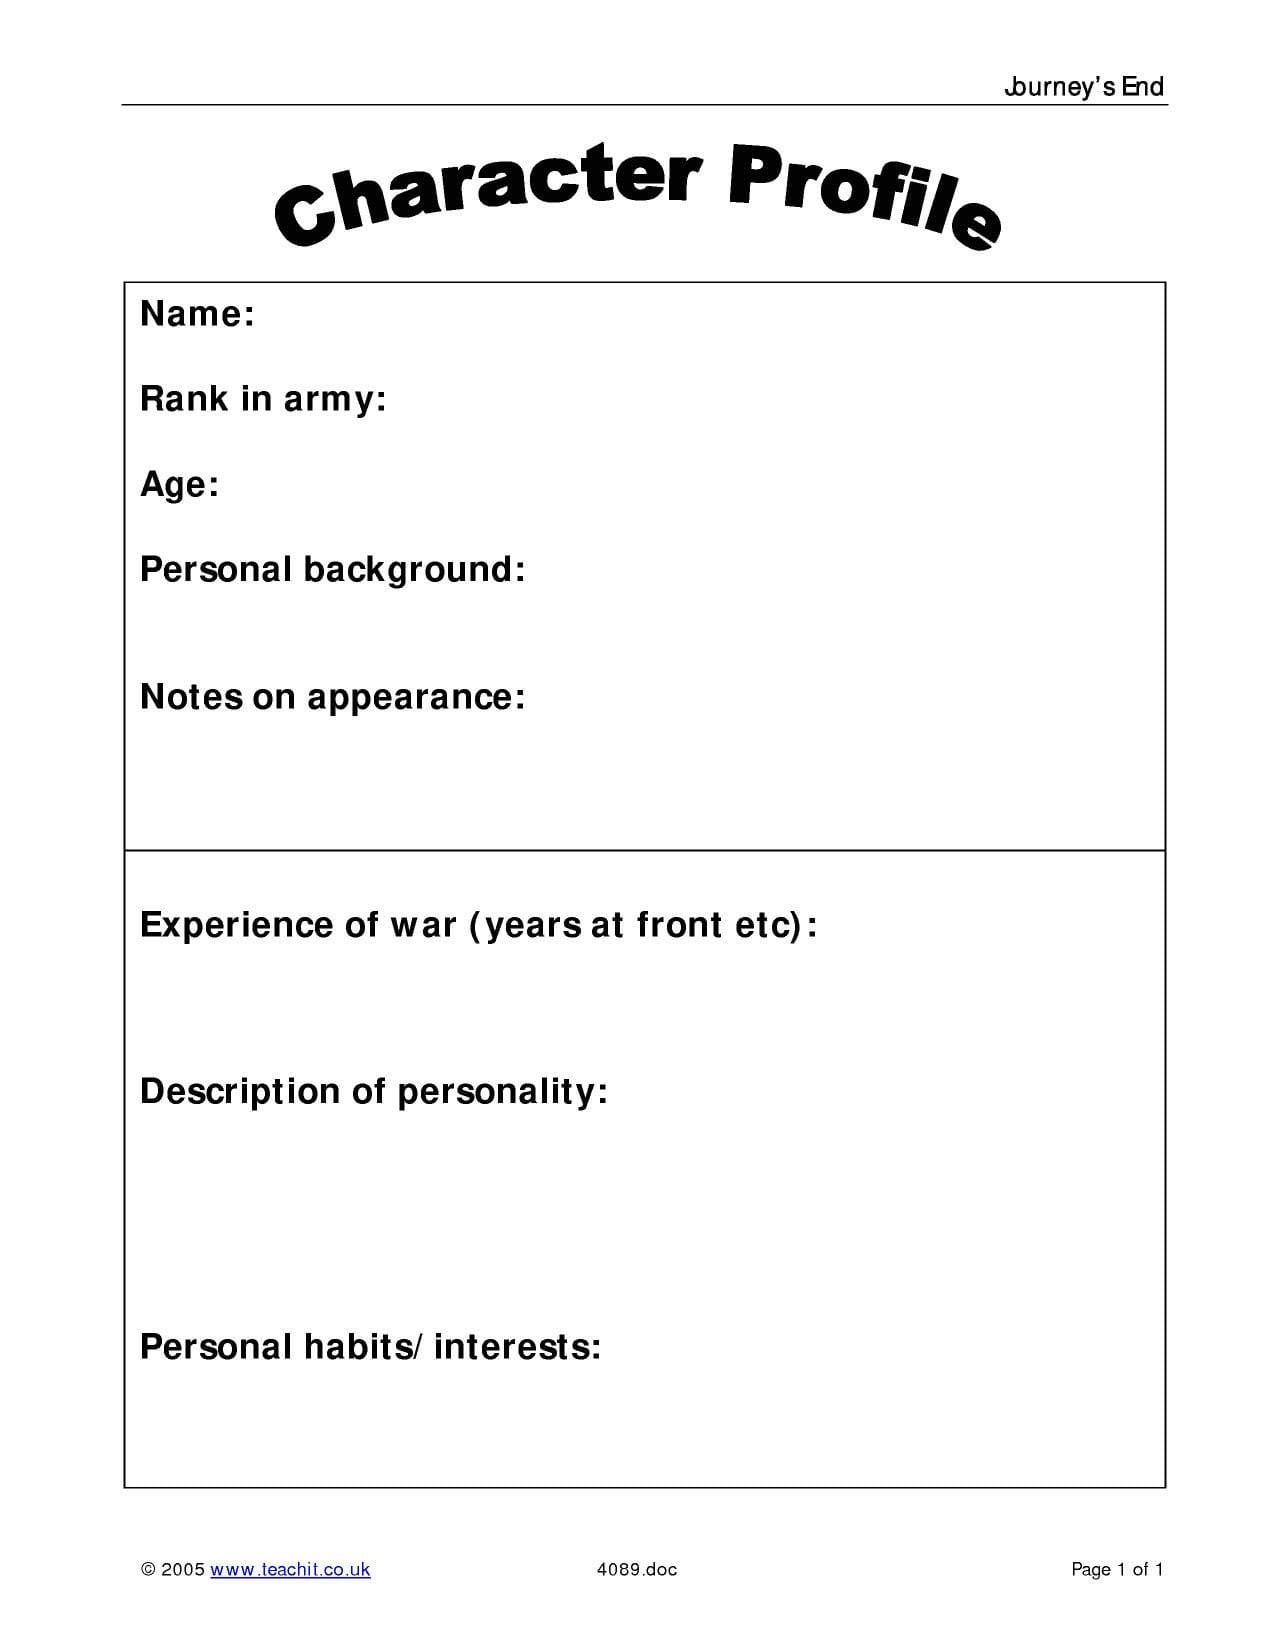 Character Profile Worksheet db excel com